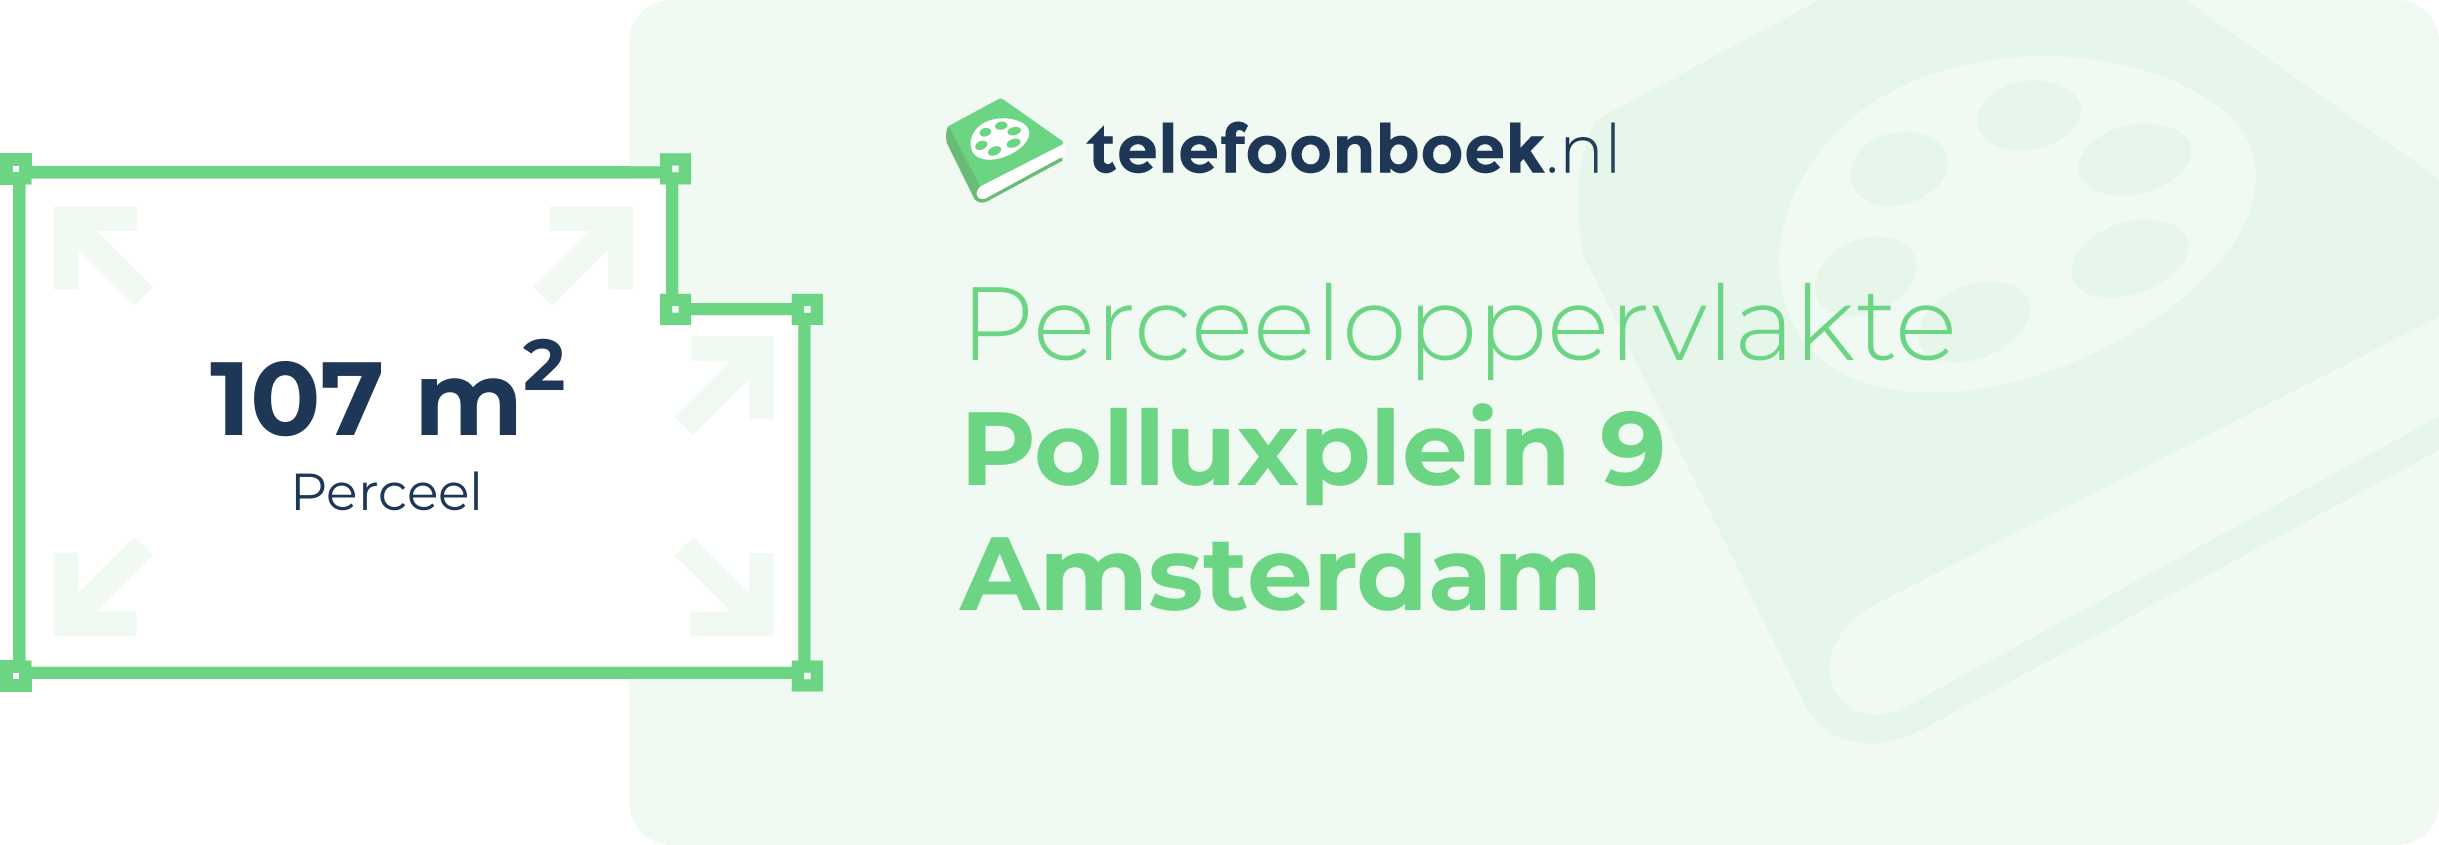 Perceeloppervlakte Polluxplein 9 Amsterdam